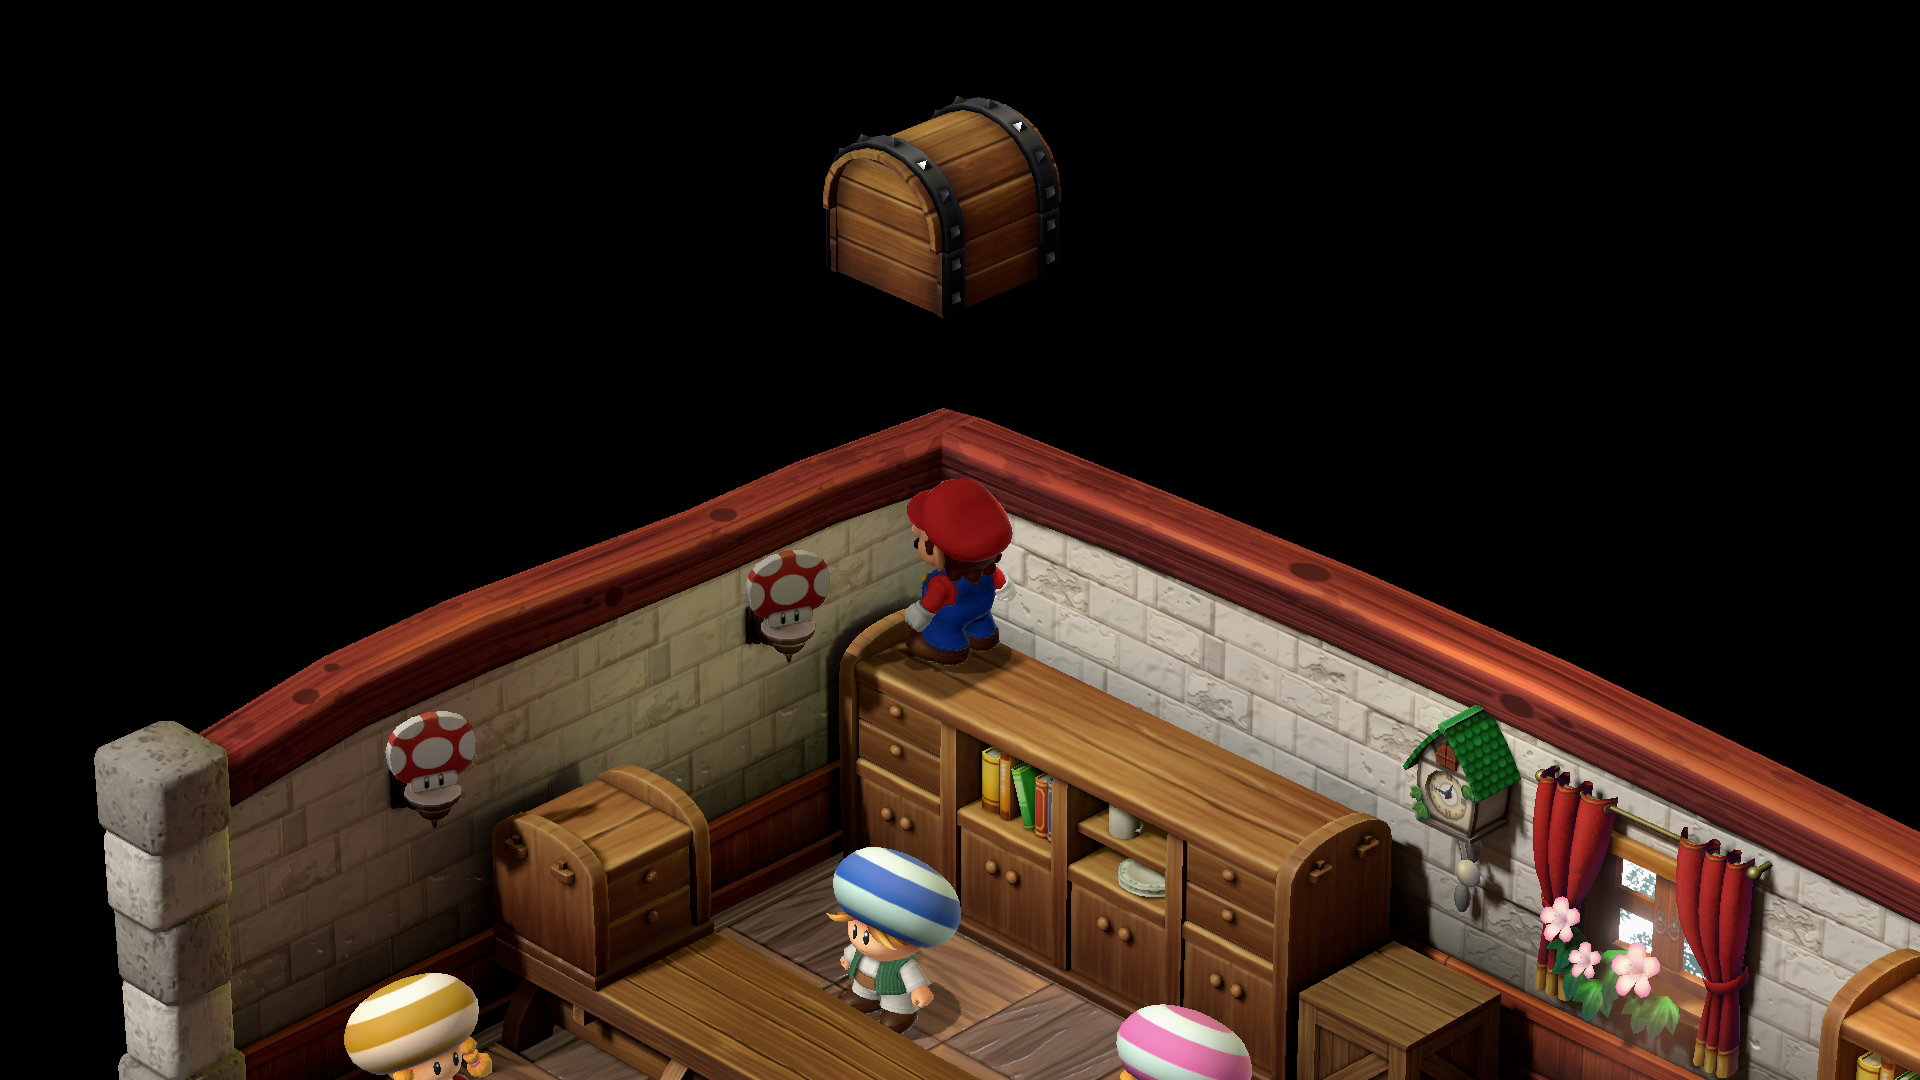 Super Mario RPG: all hidden chest locations